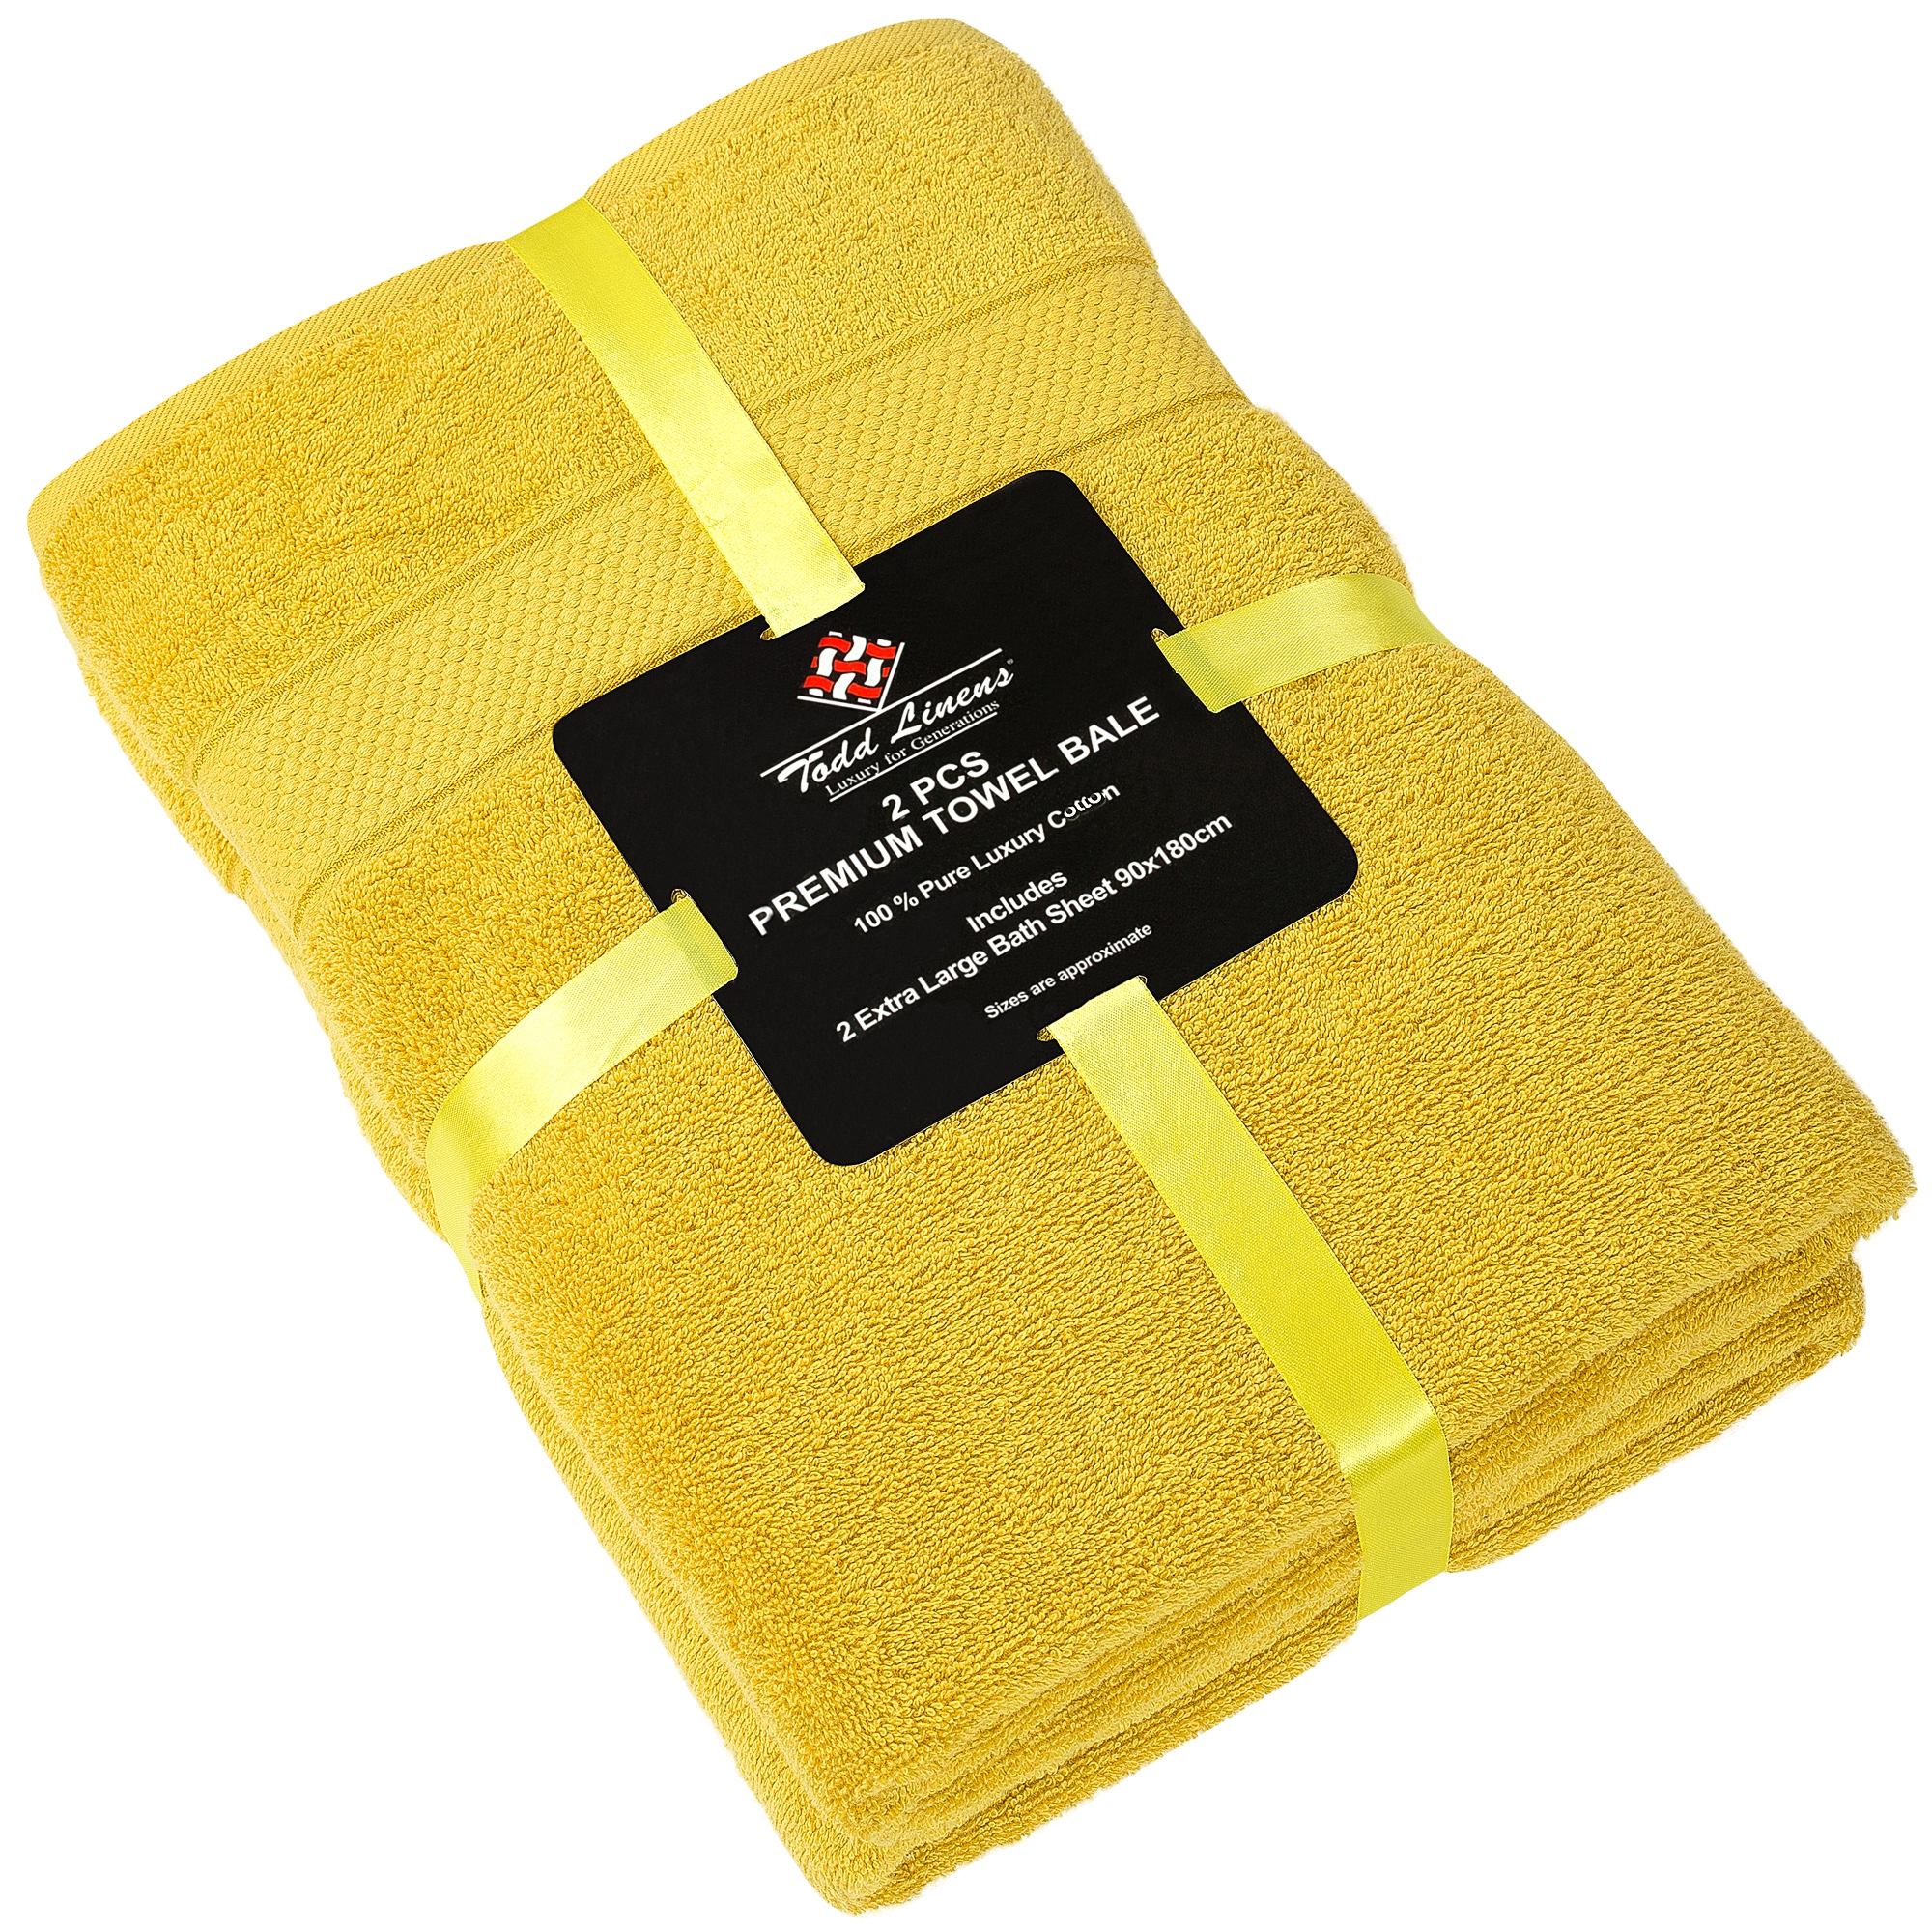 Bale Set 2pcs Mustard Premium Plain Extra Large Bath Sheet Towel